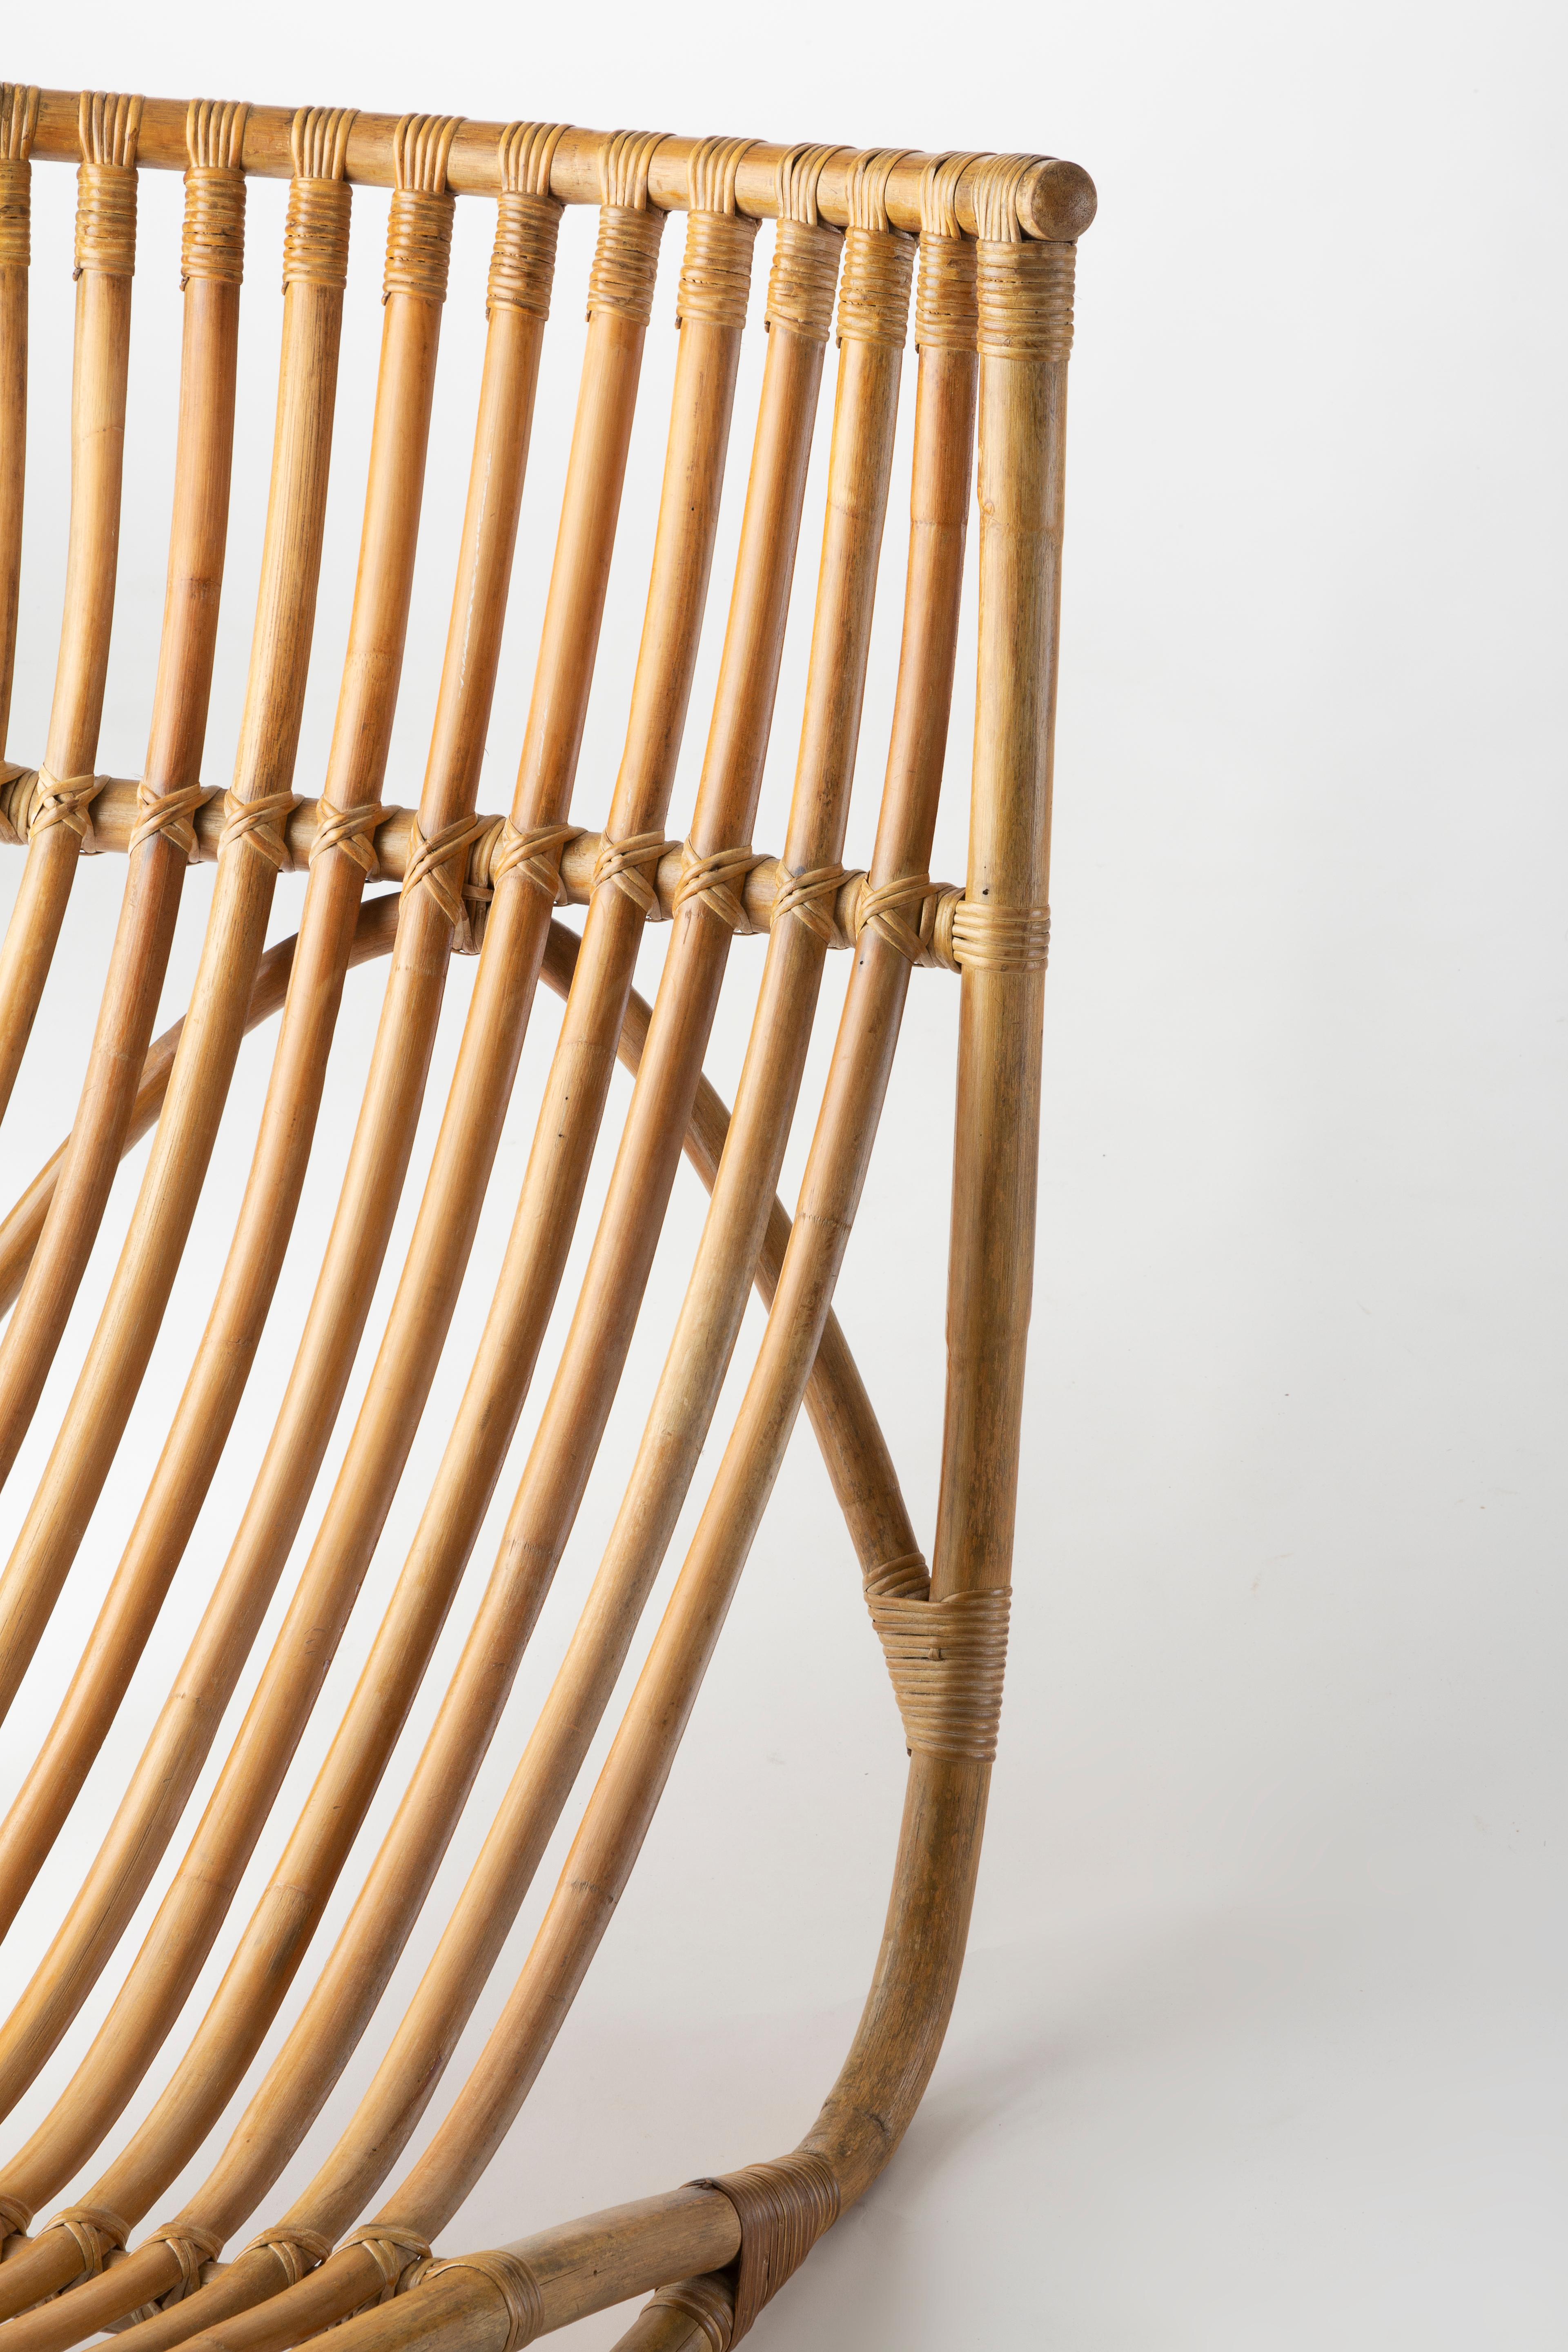 Bamboo Chaise Longue by Yuzuru Yamakawa, Yamakawa Rattan